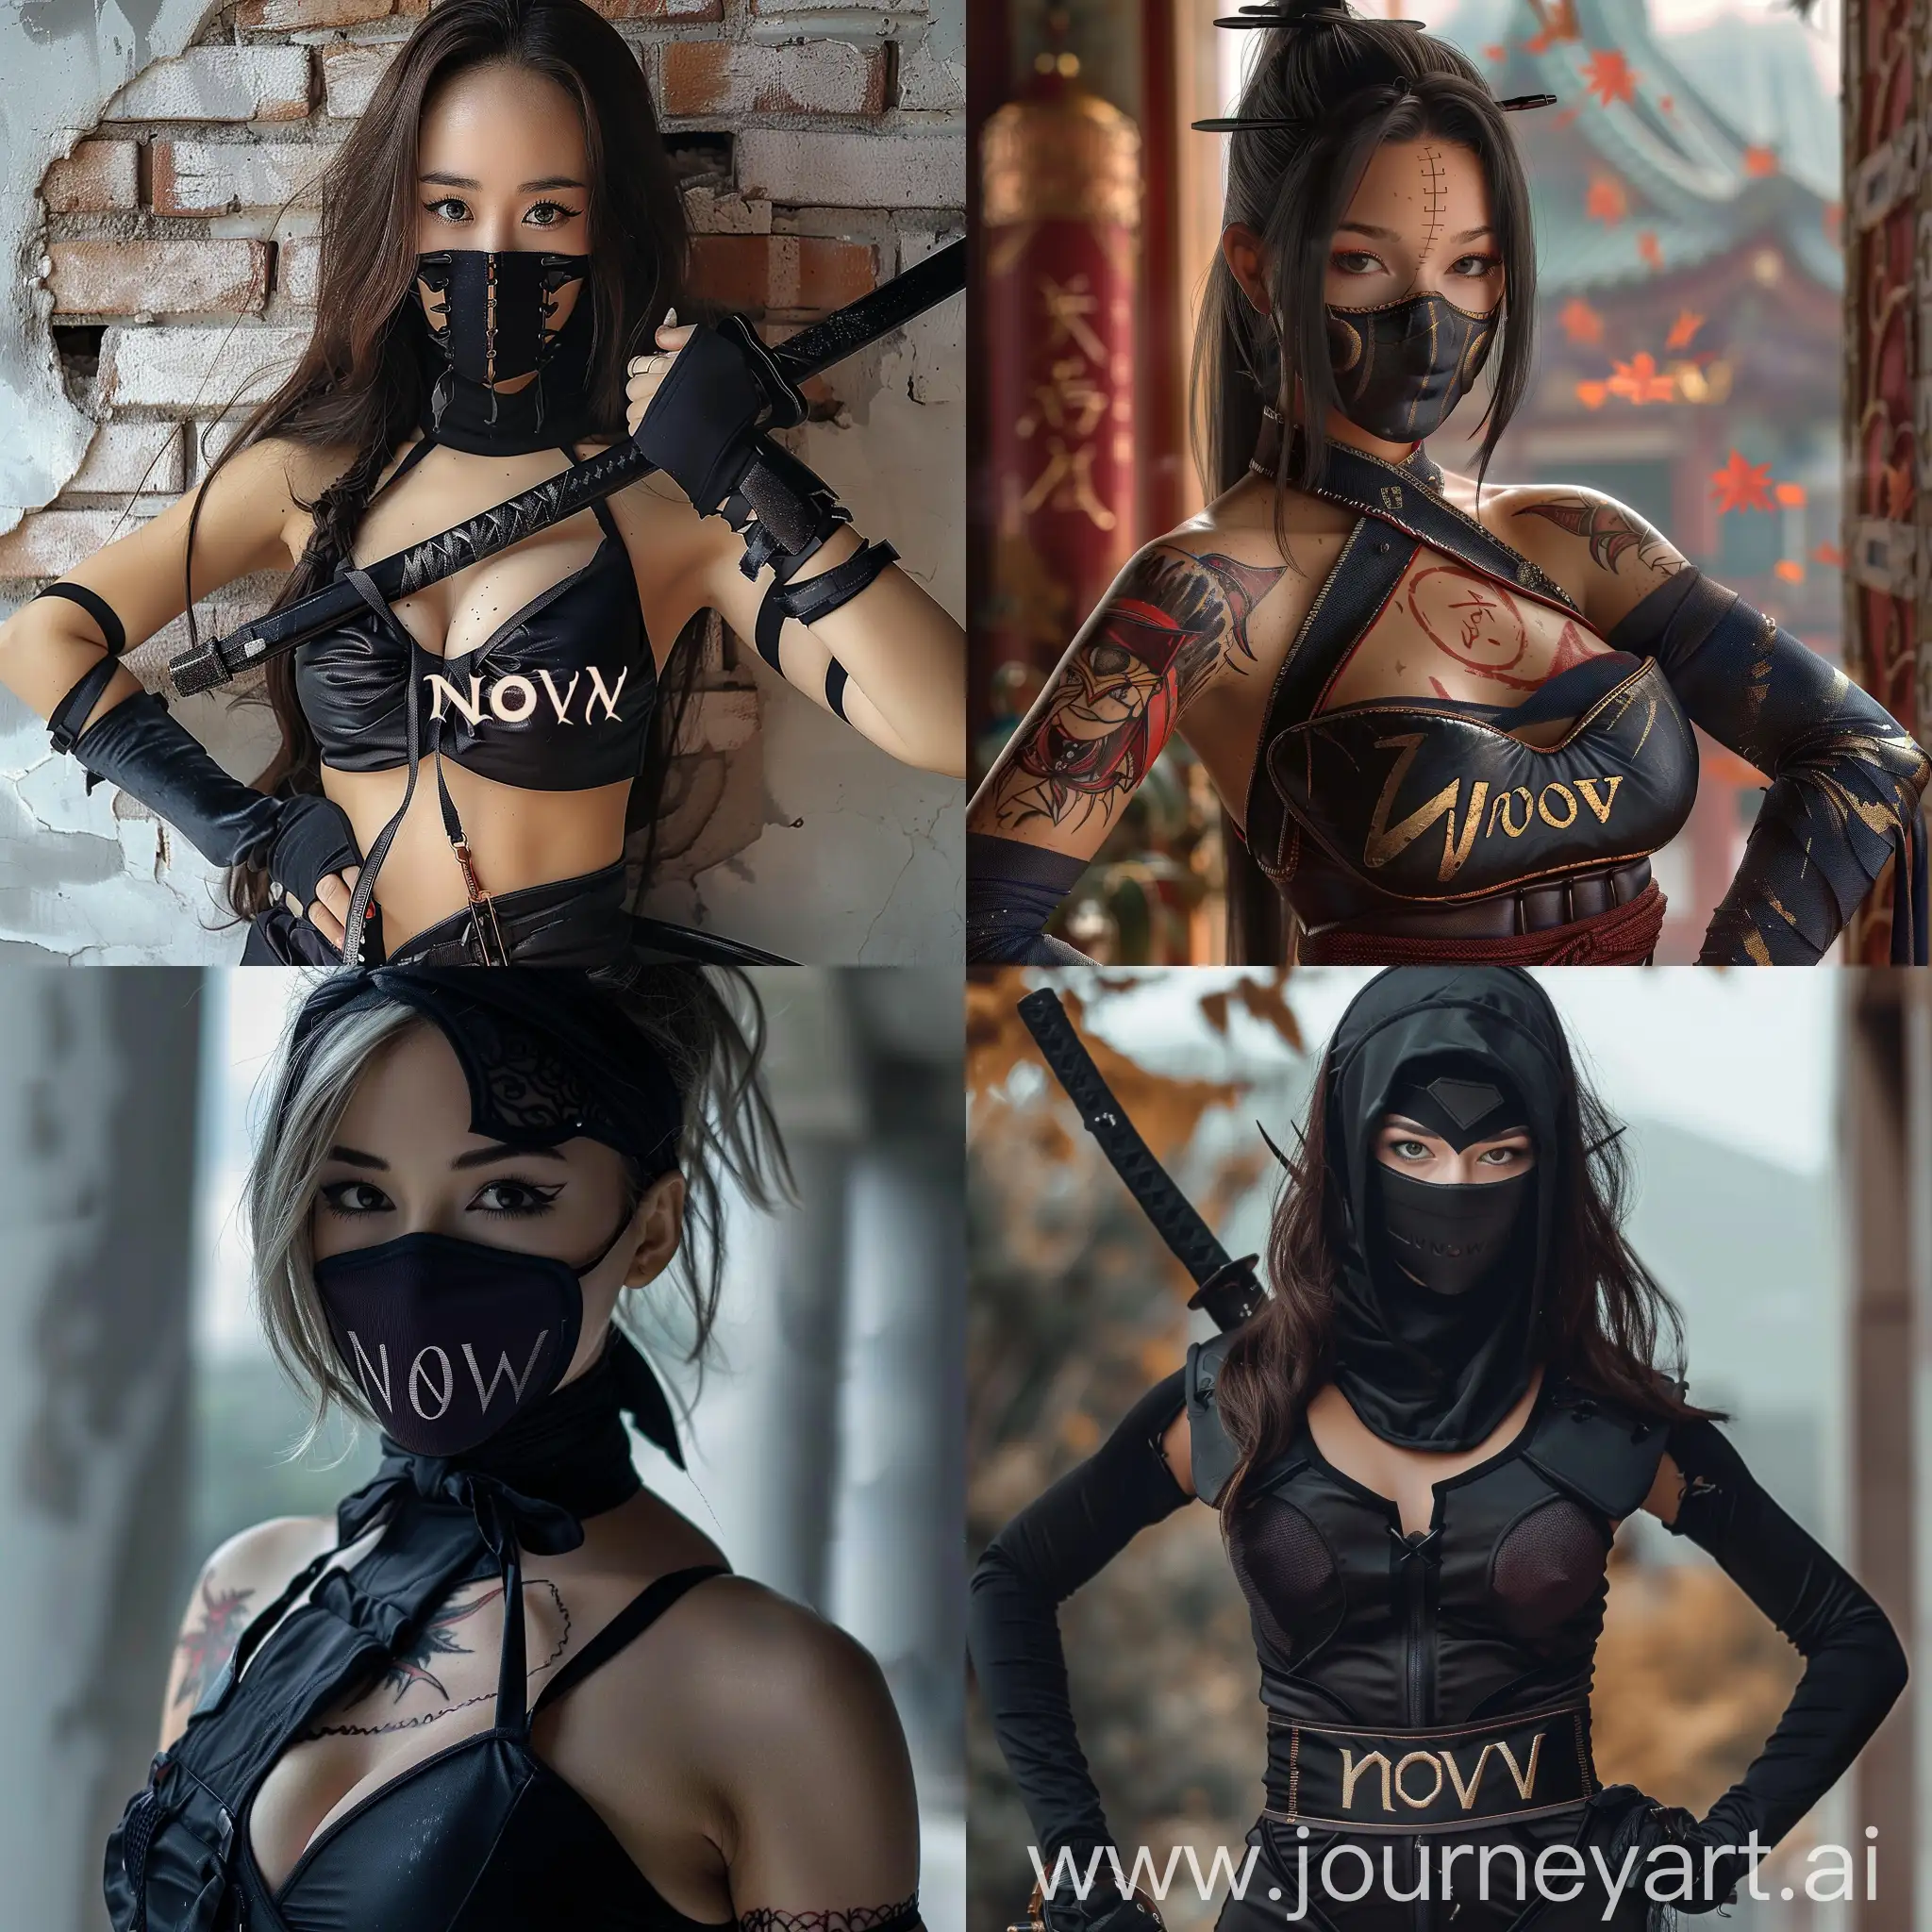  beautiful ninja woman , NOVA written on her

